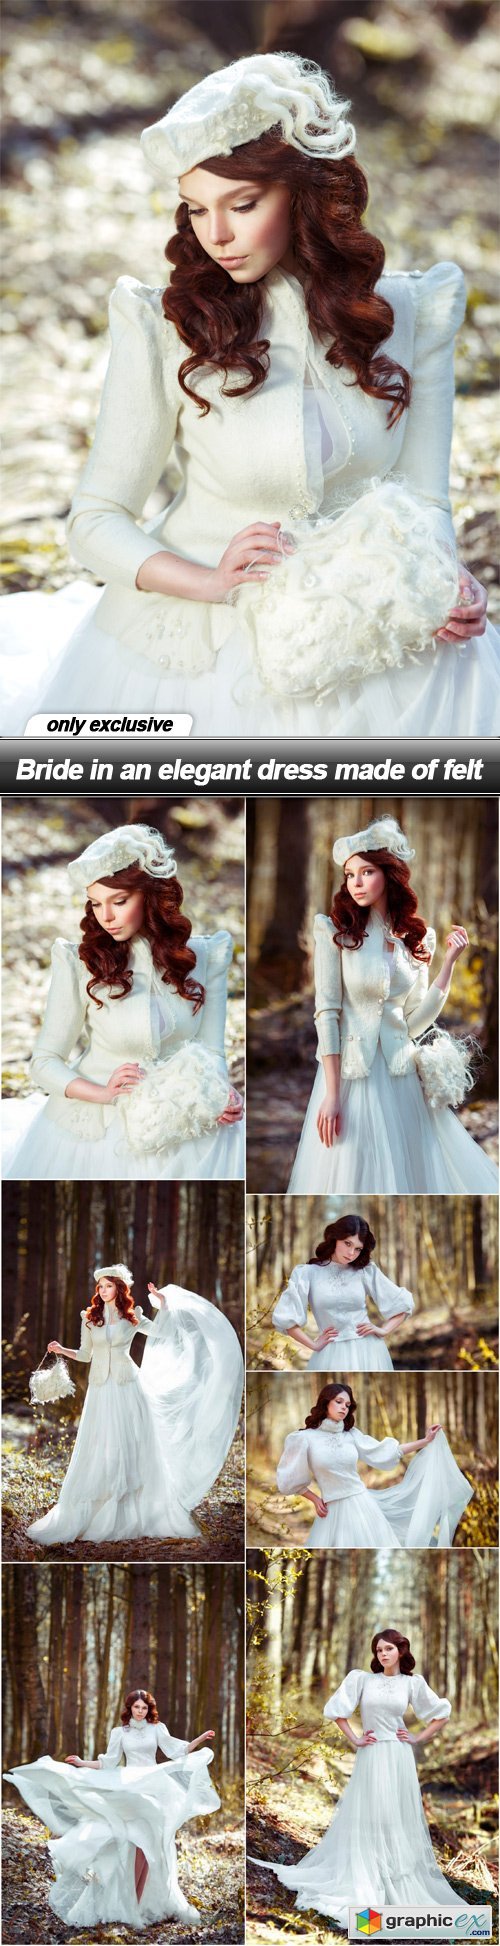 Bride in an elegant dress made of felt - 7 UHQ JPEG